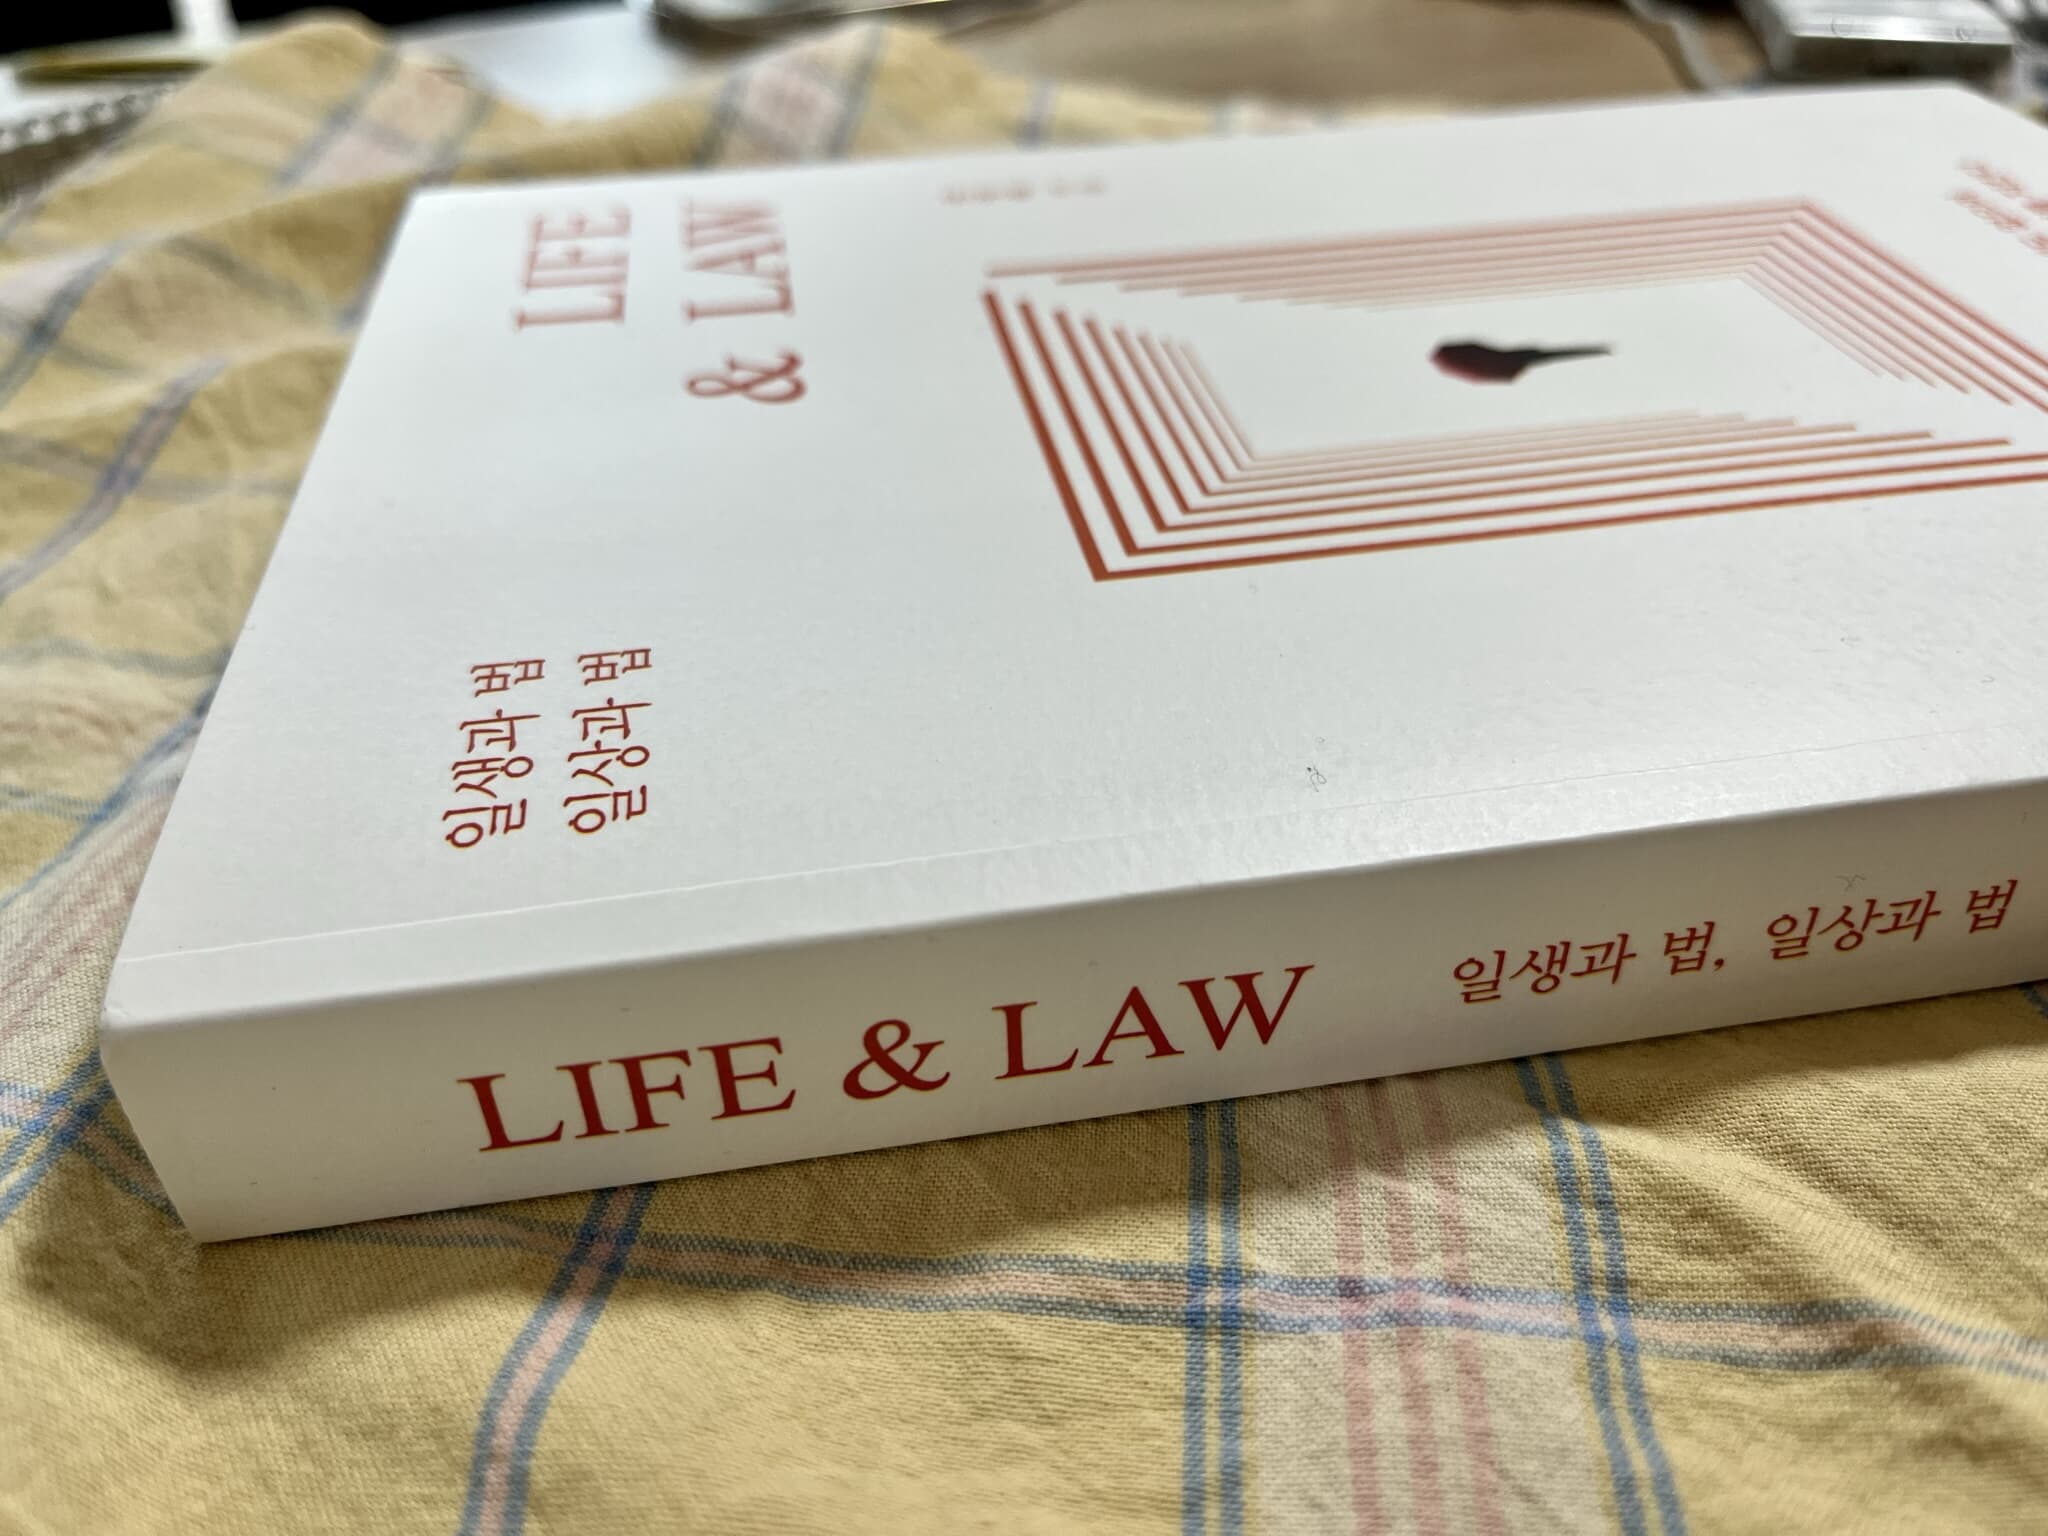 LIFE & LAW